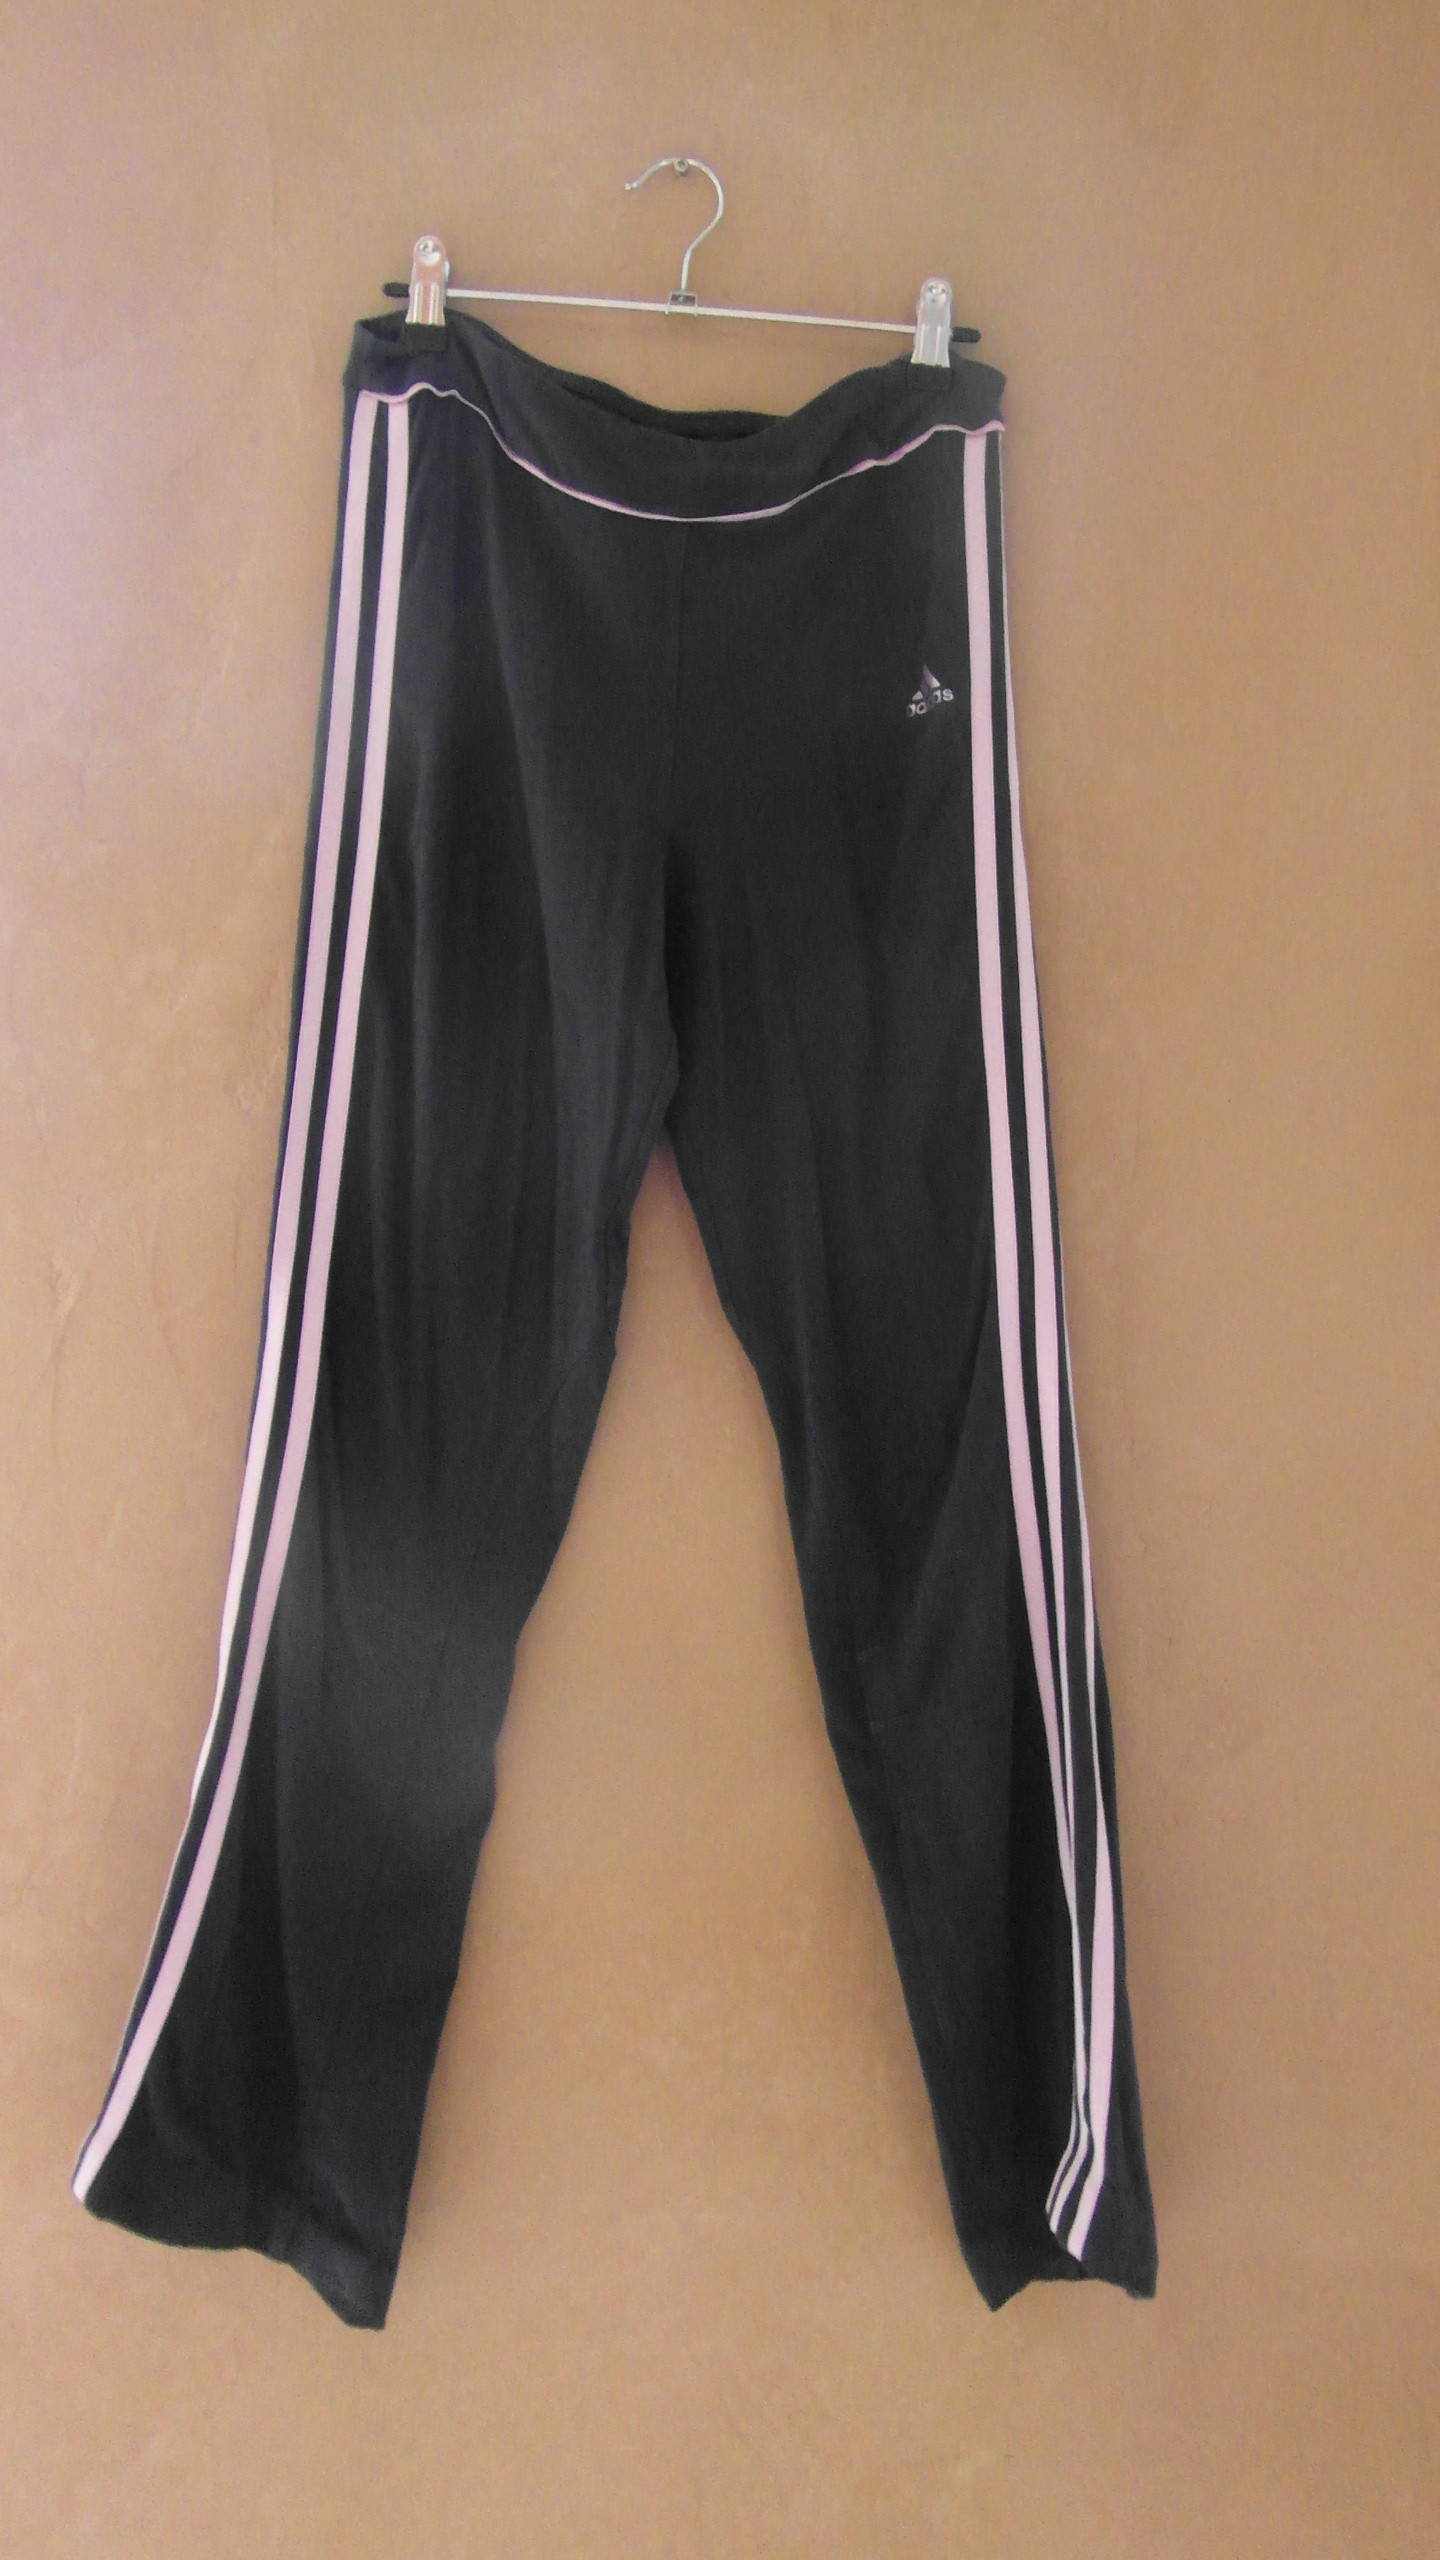 Adidas Originals Adaptive Wind Pants Men's Running HN0387 Black NWT Sz Large